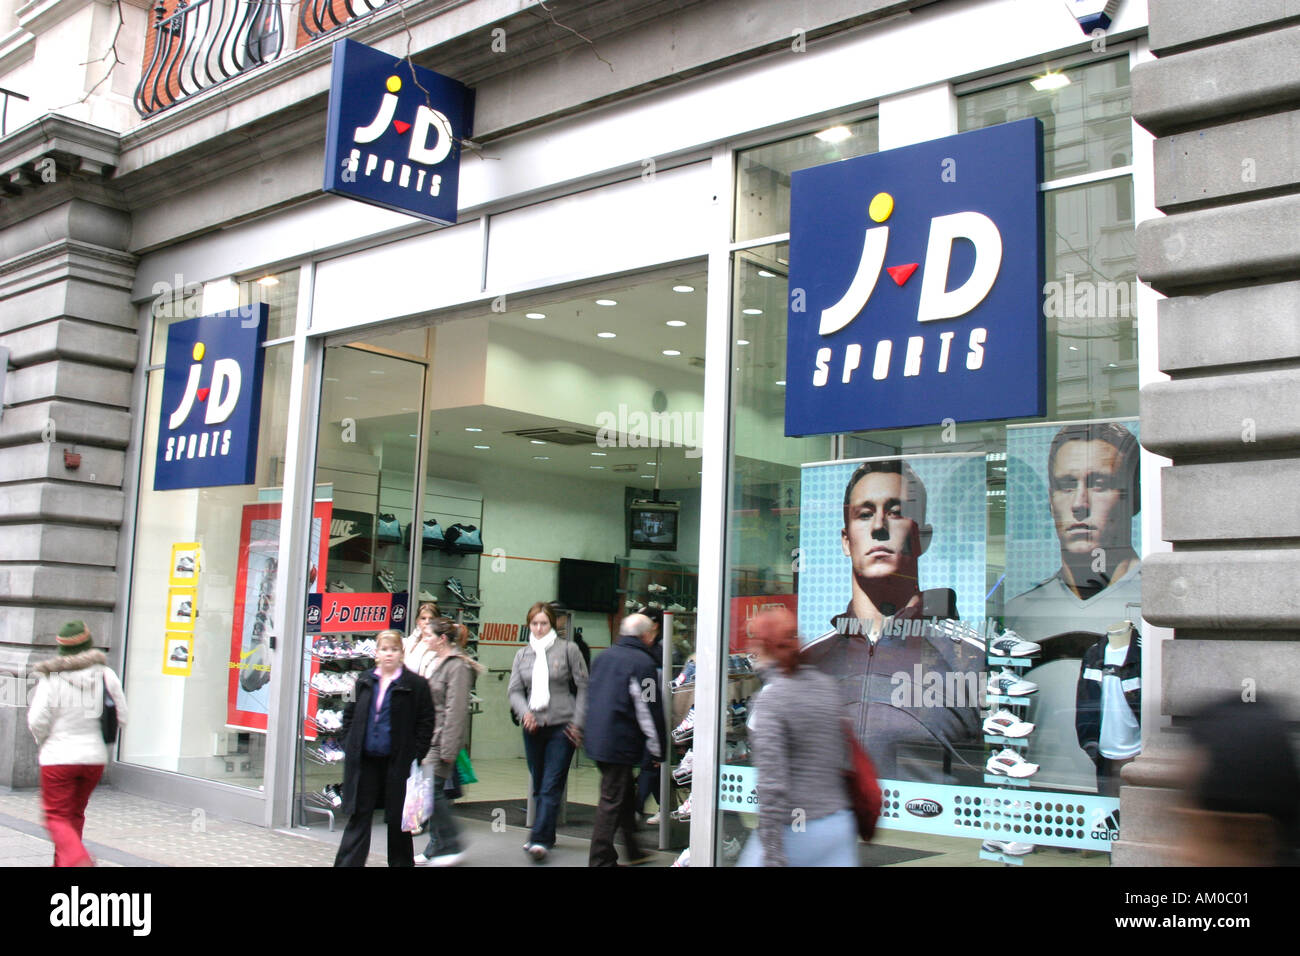 jd sports retail shop in oxford street london uk Stock Photo